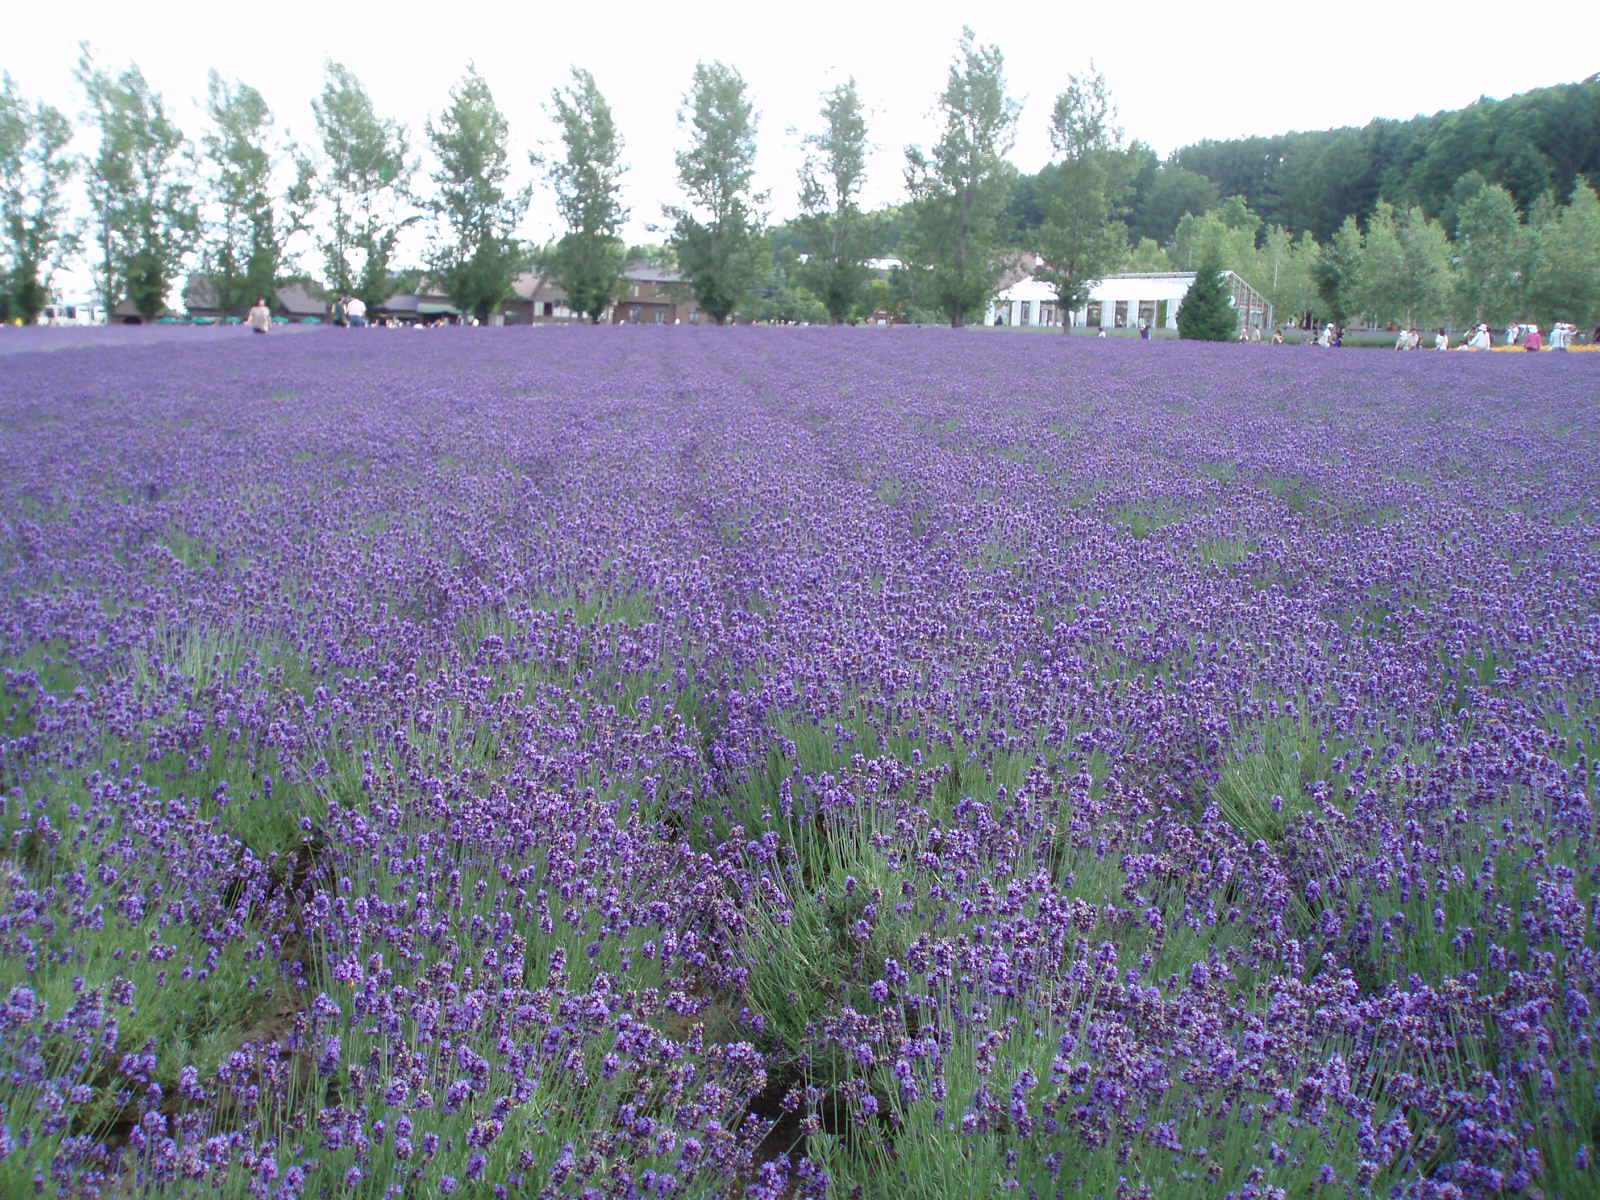 large field full of purple flowers in a rural area